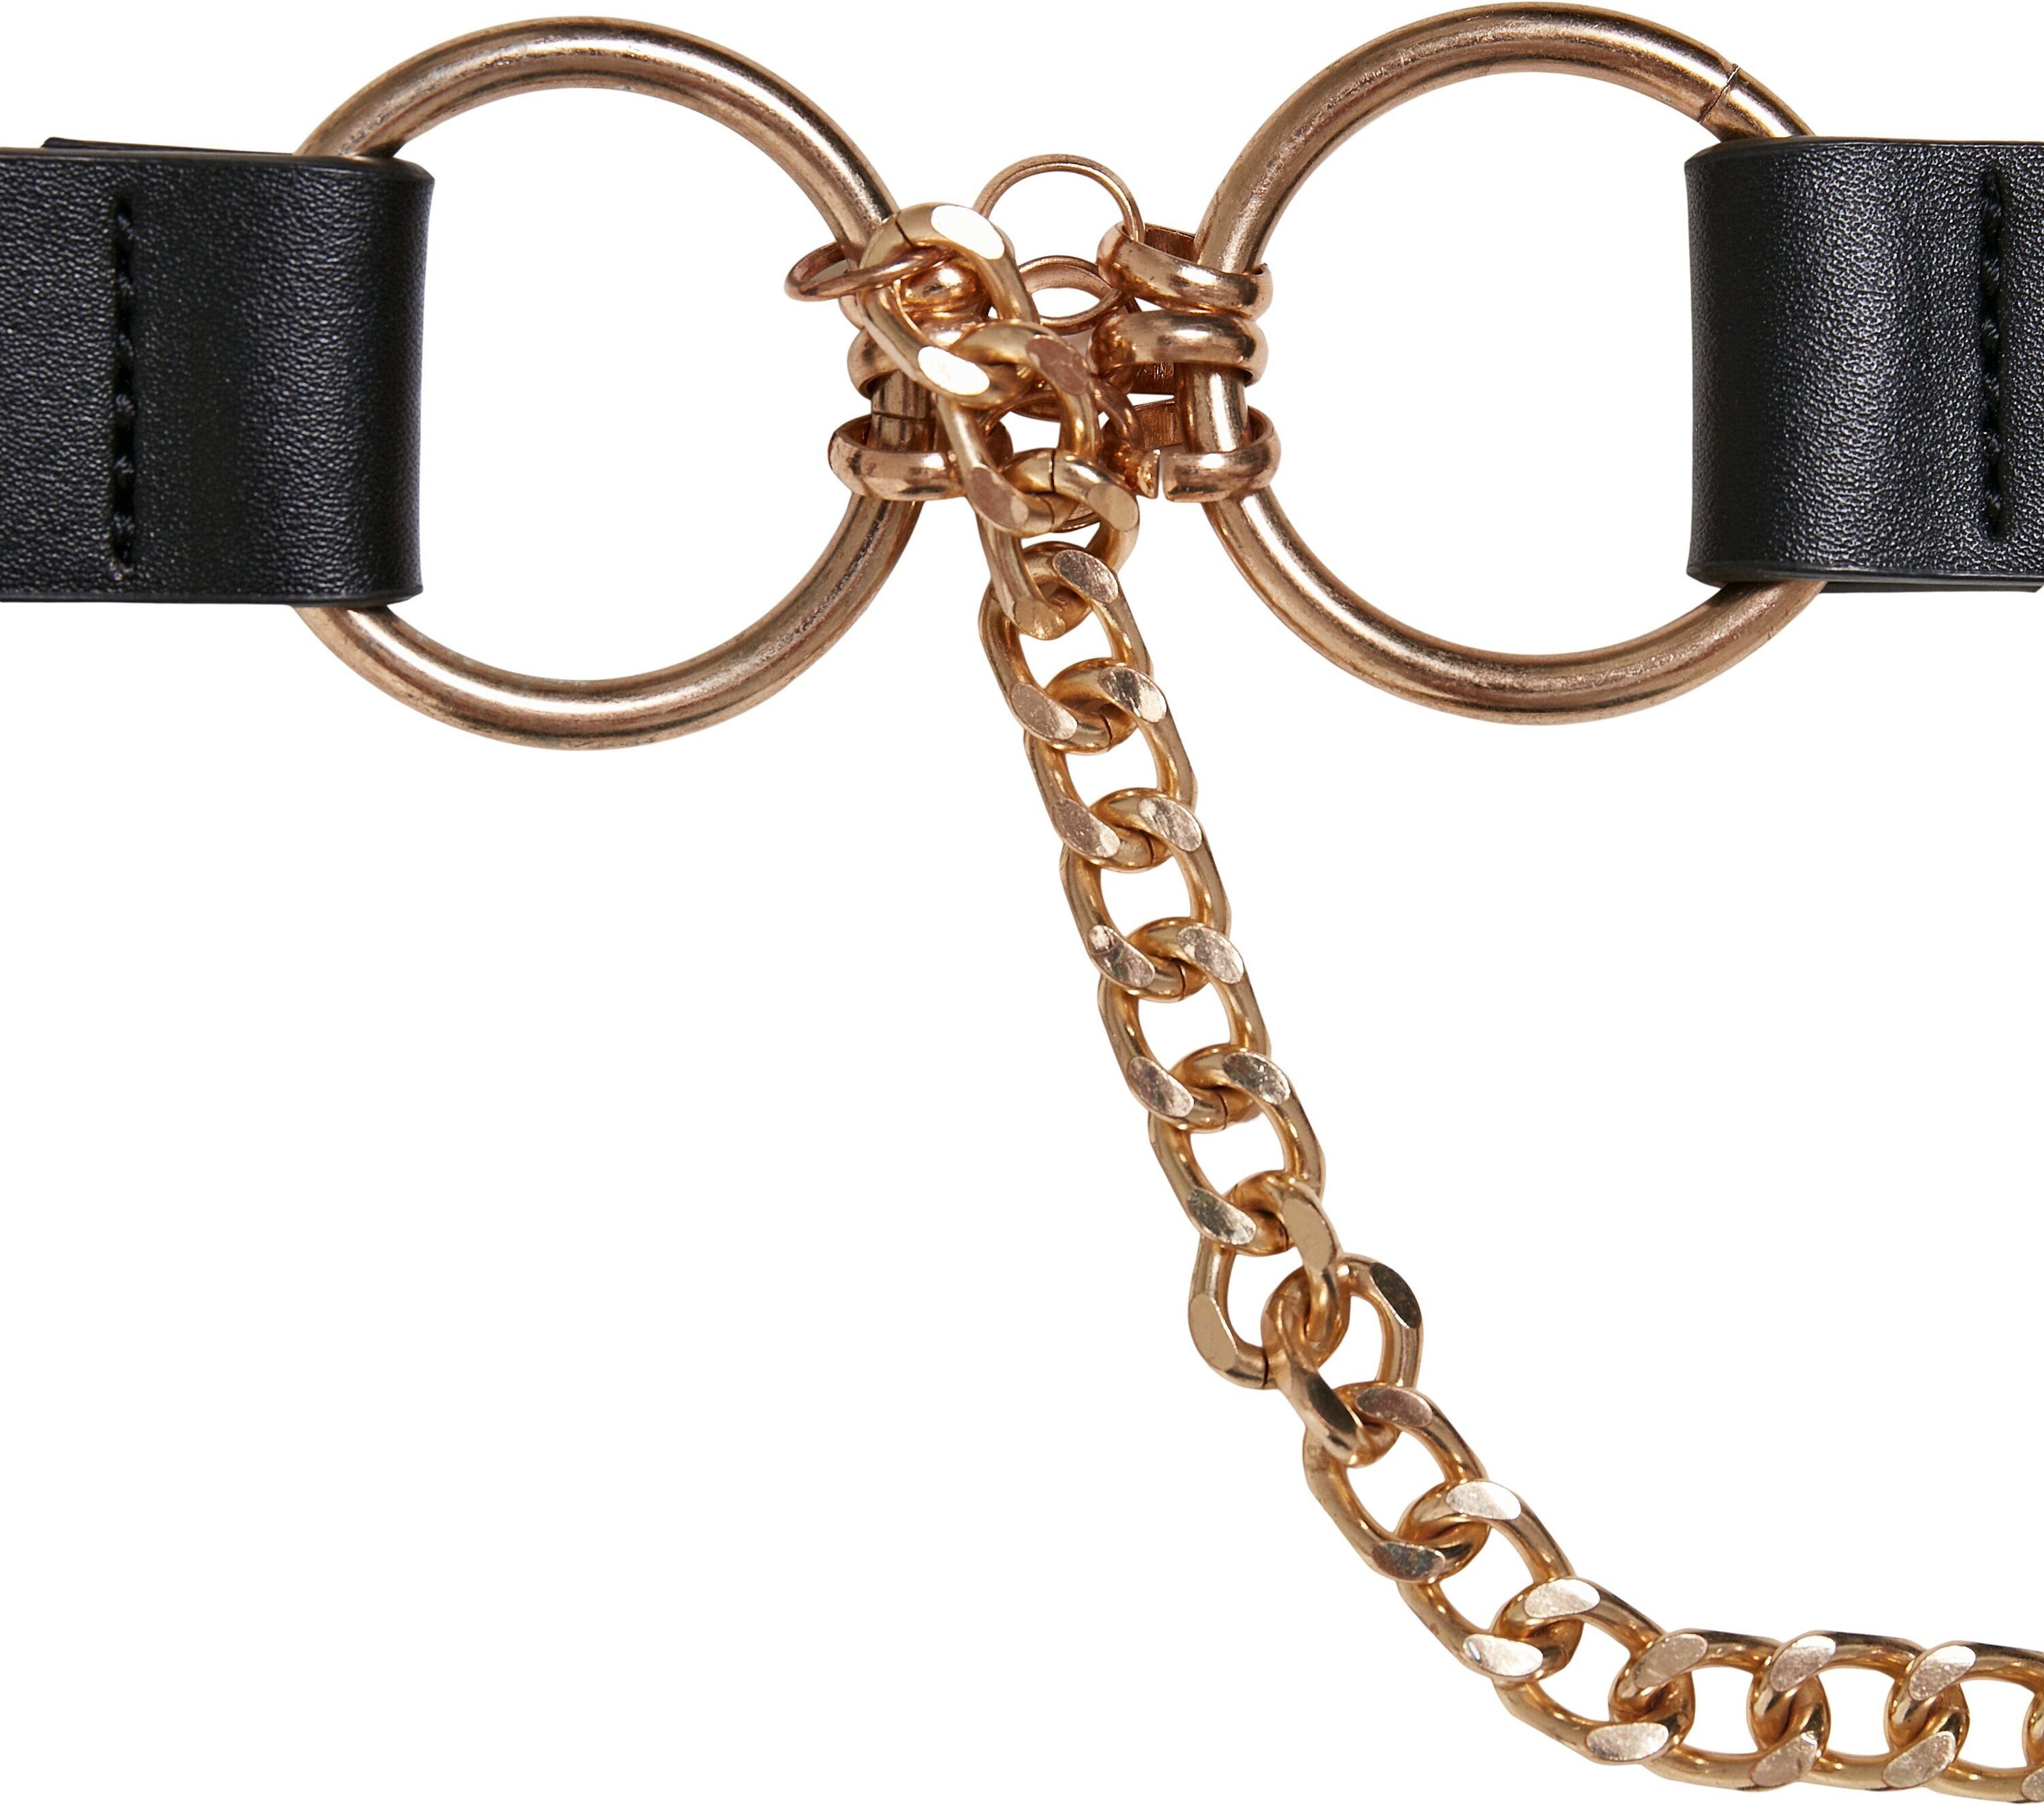 Accessoires CLASSICS Chain Leather Belt URBAN Synthetic With Hüftgürtel